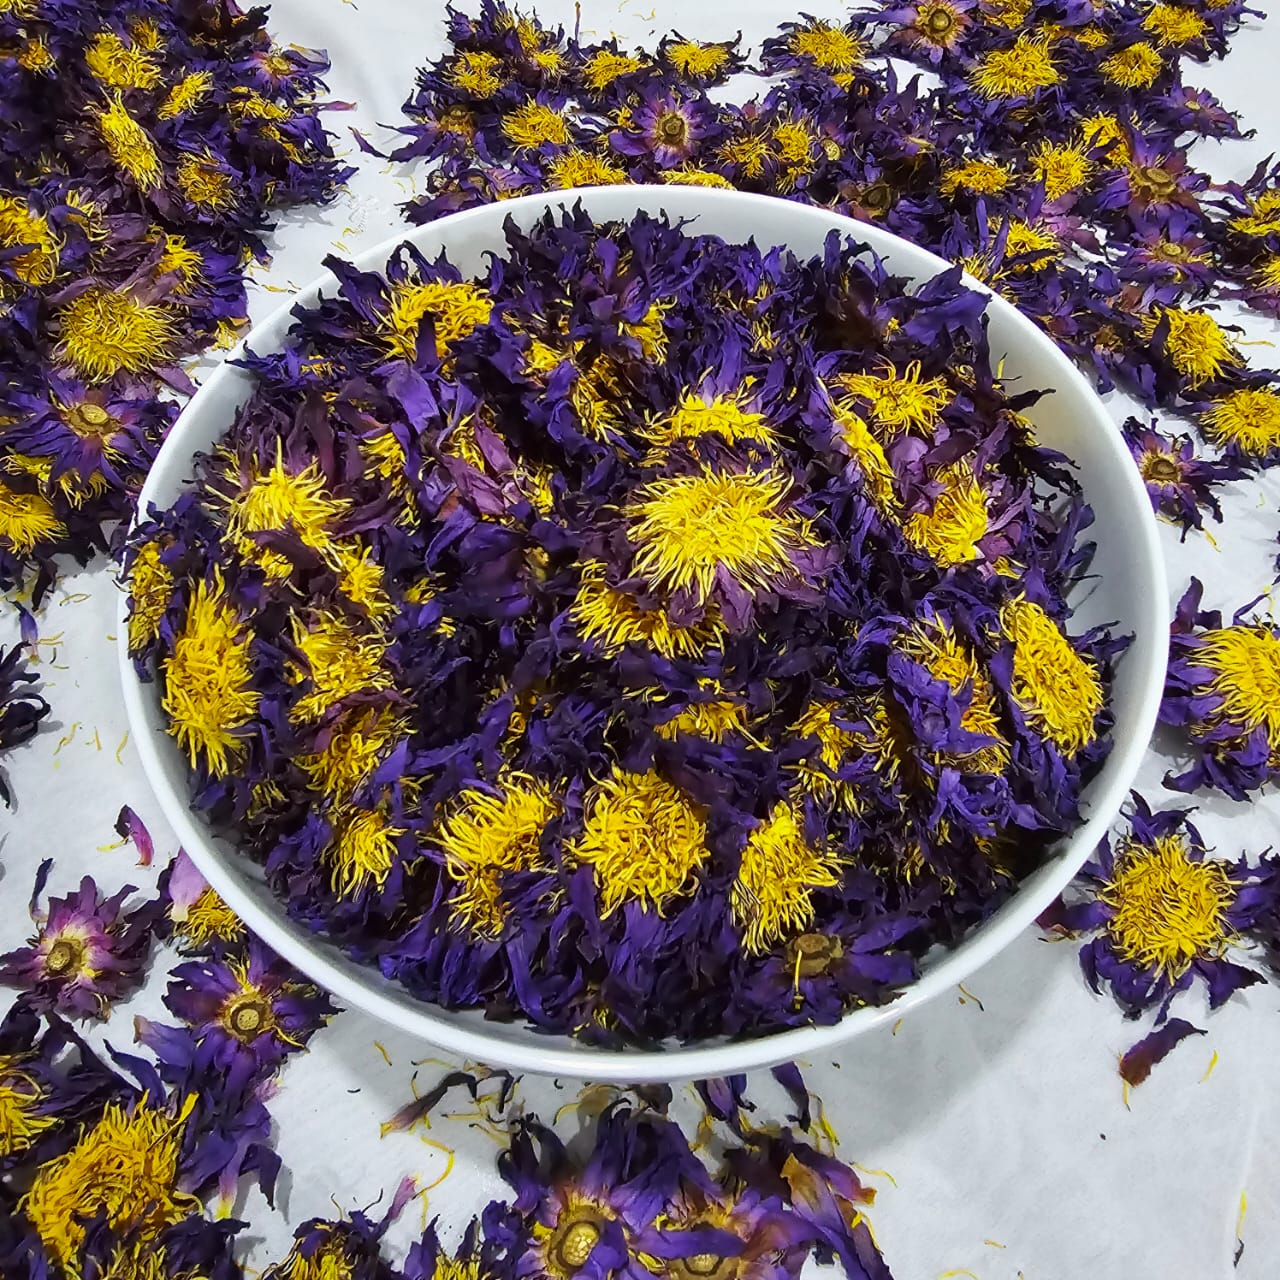 BLUE LOTUS Nymphaea CaeruleaHand Picked Dried Flower | 100% Organic Ceylon Natural Herbal Flowers